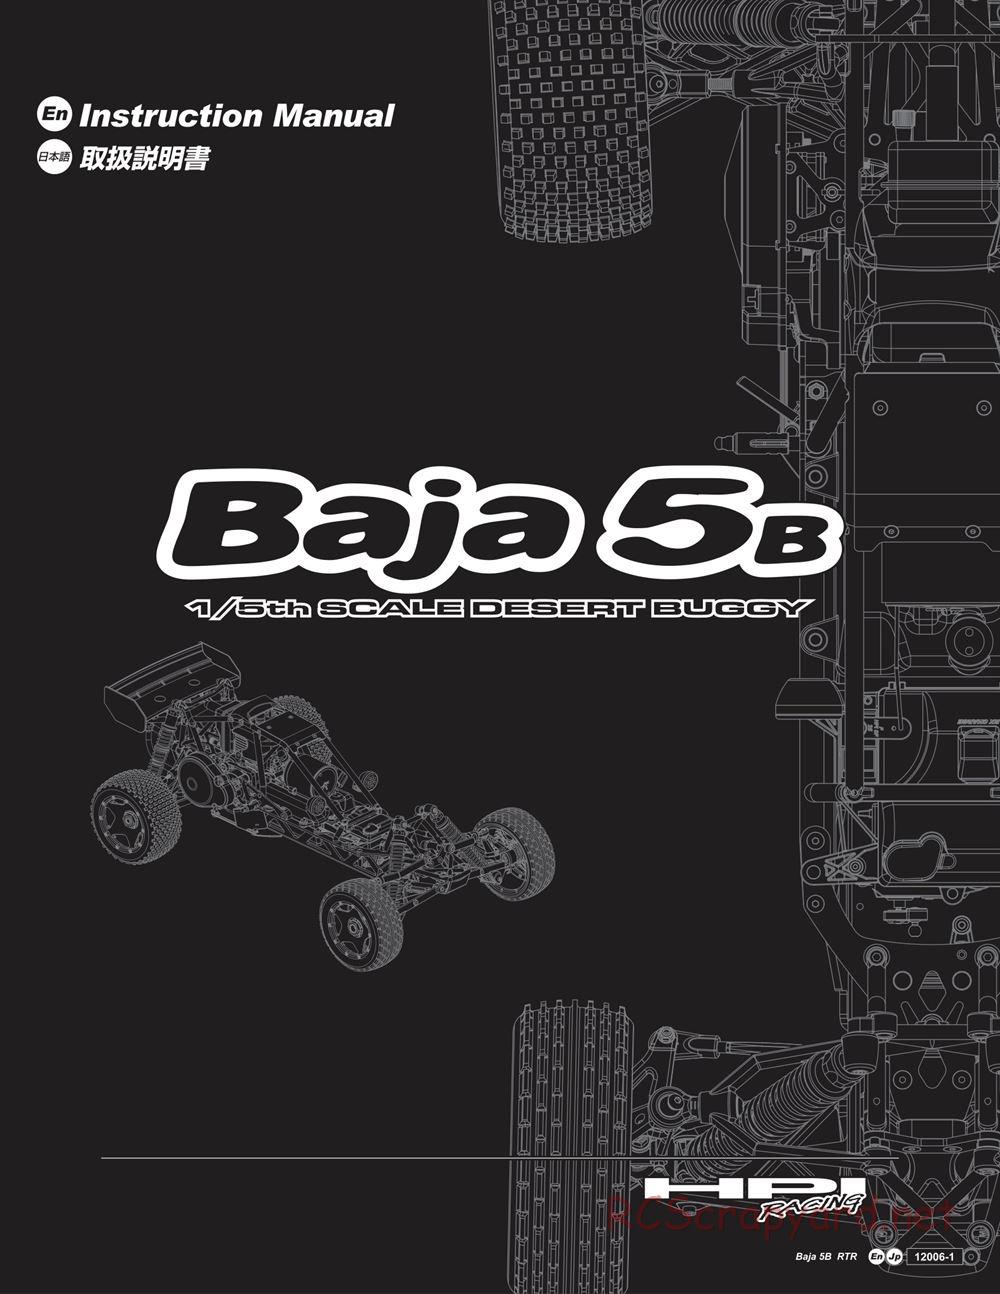 HPI - Baja 5B - Manual - Page 1